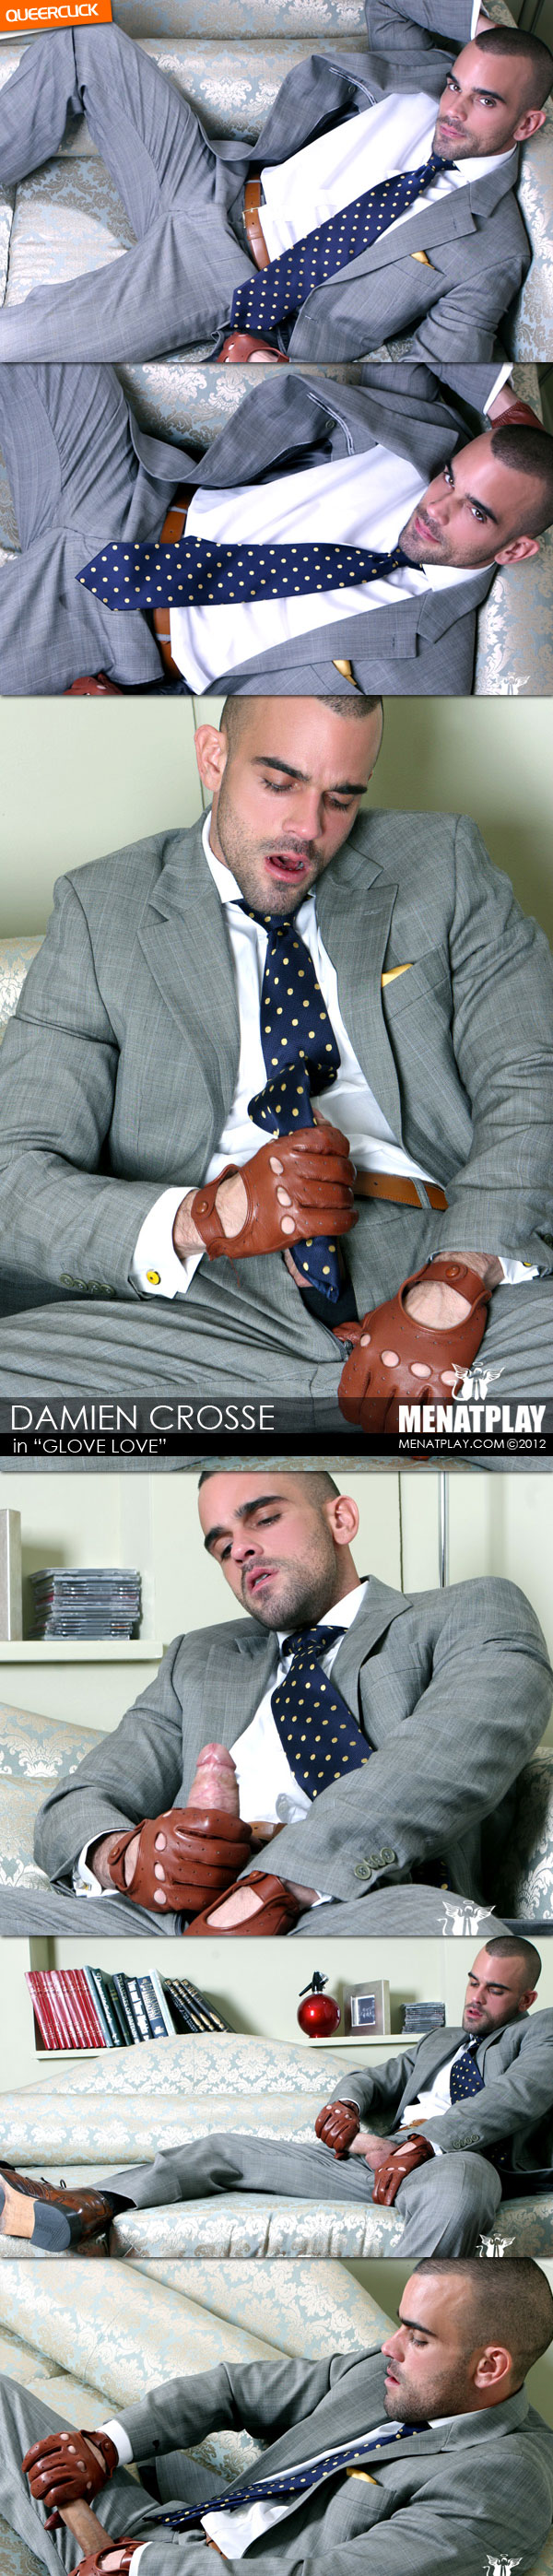 Men At Play: Glove Love - Damien Crosse